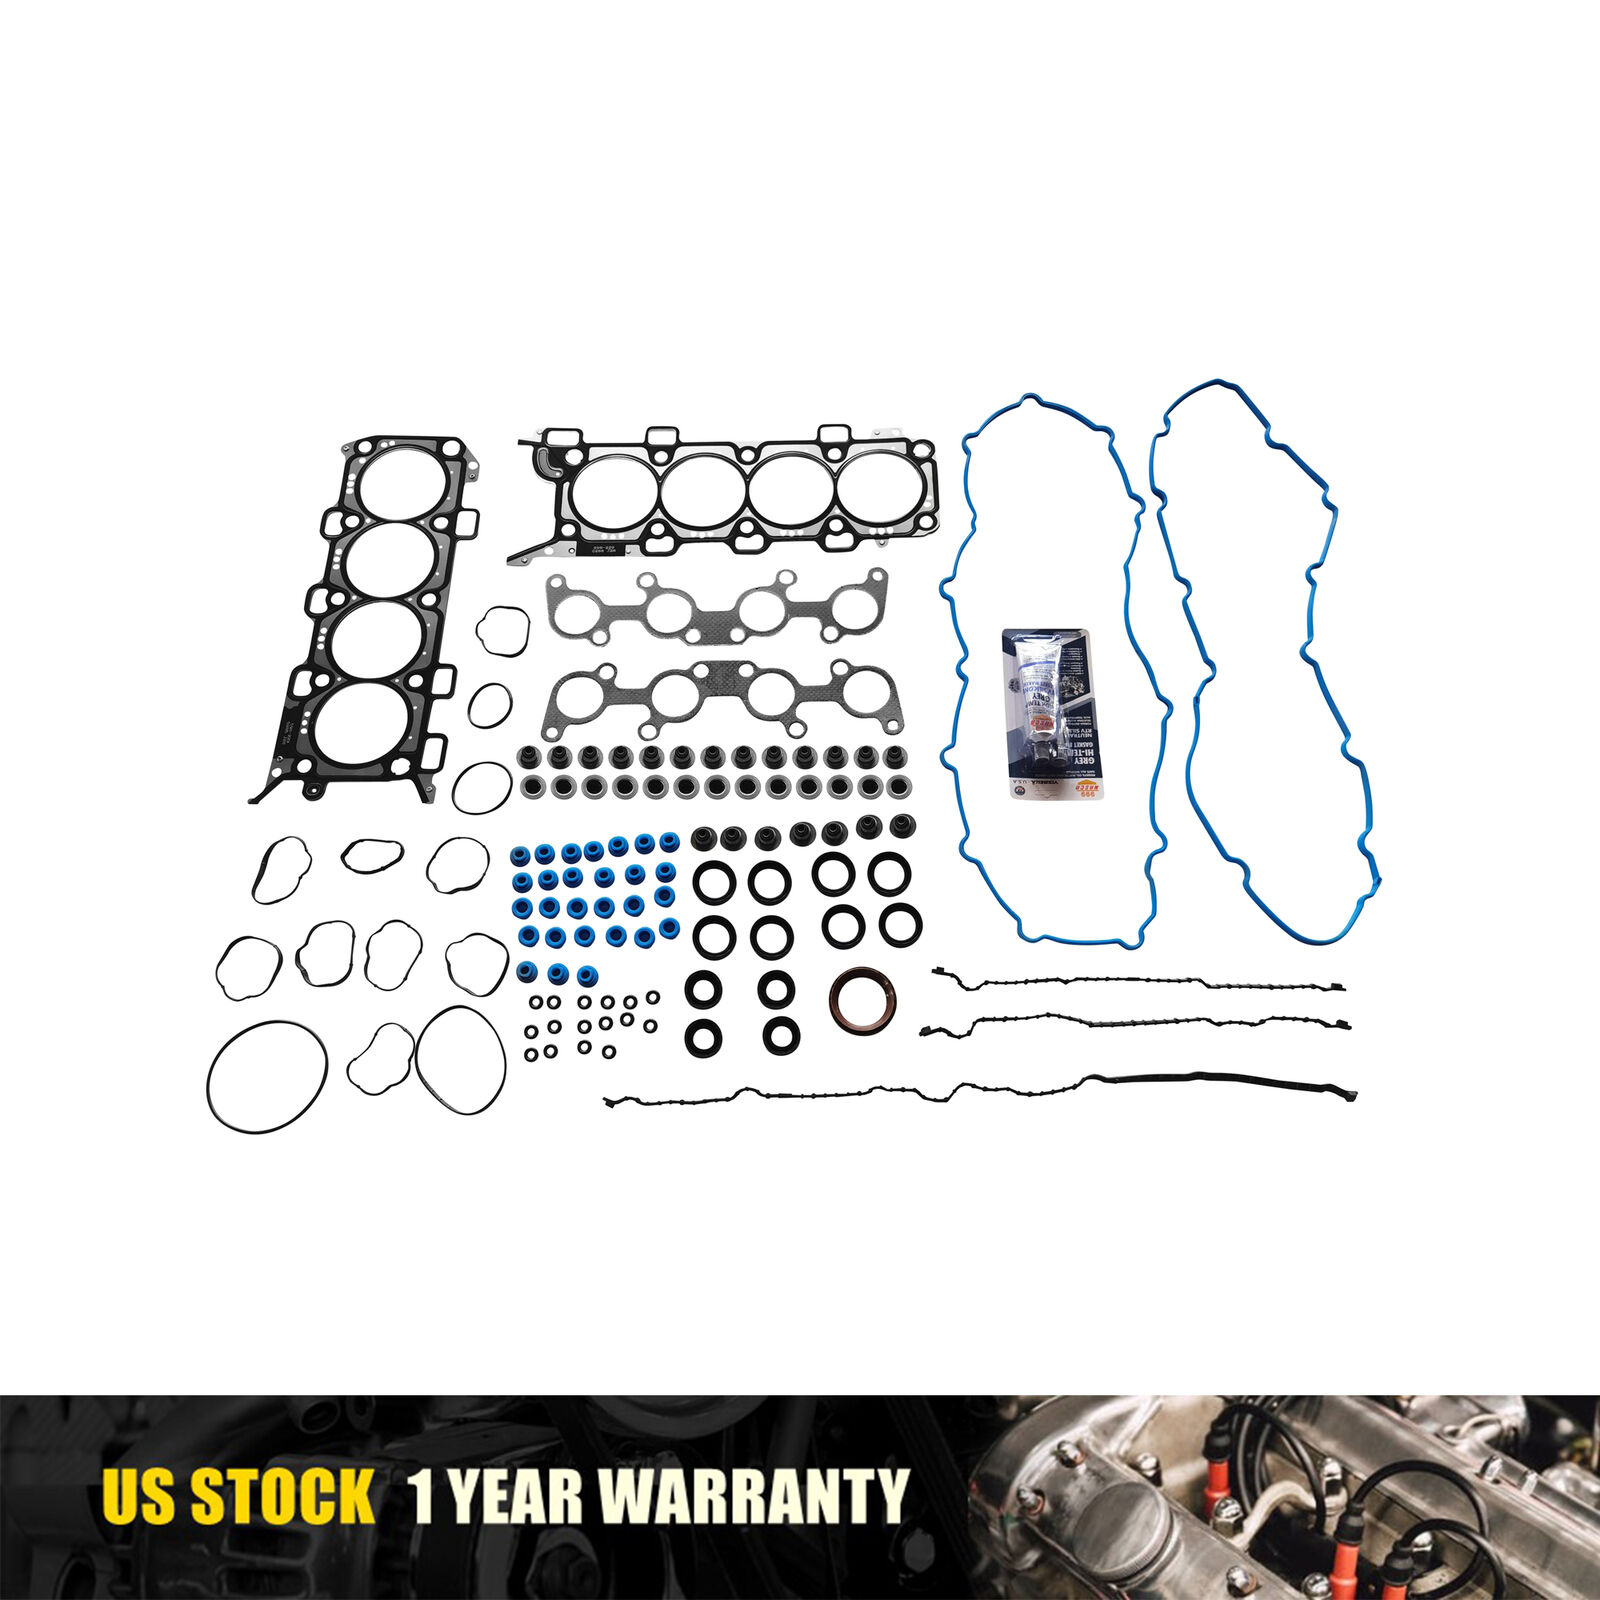 Partsflow Full Gasket Set 11mm Bolts for Ford F-150 V8 2013-2014 for Ford F-150 V8 Flex 2011-2014 for Ford Mustang V8 2011-2014 4951CC 302CID (32 Valv - 5